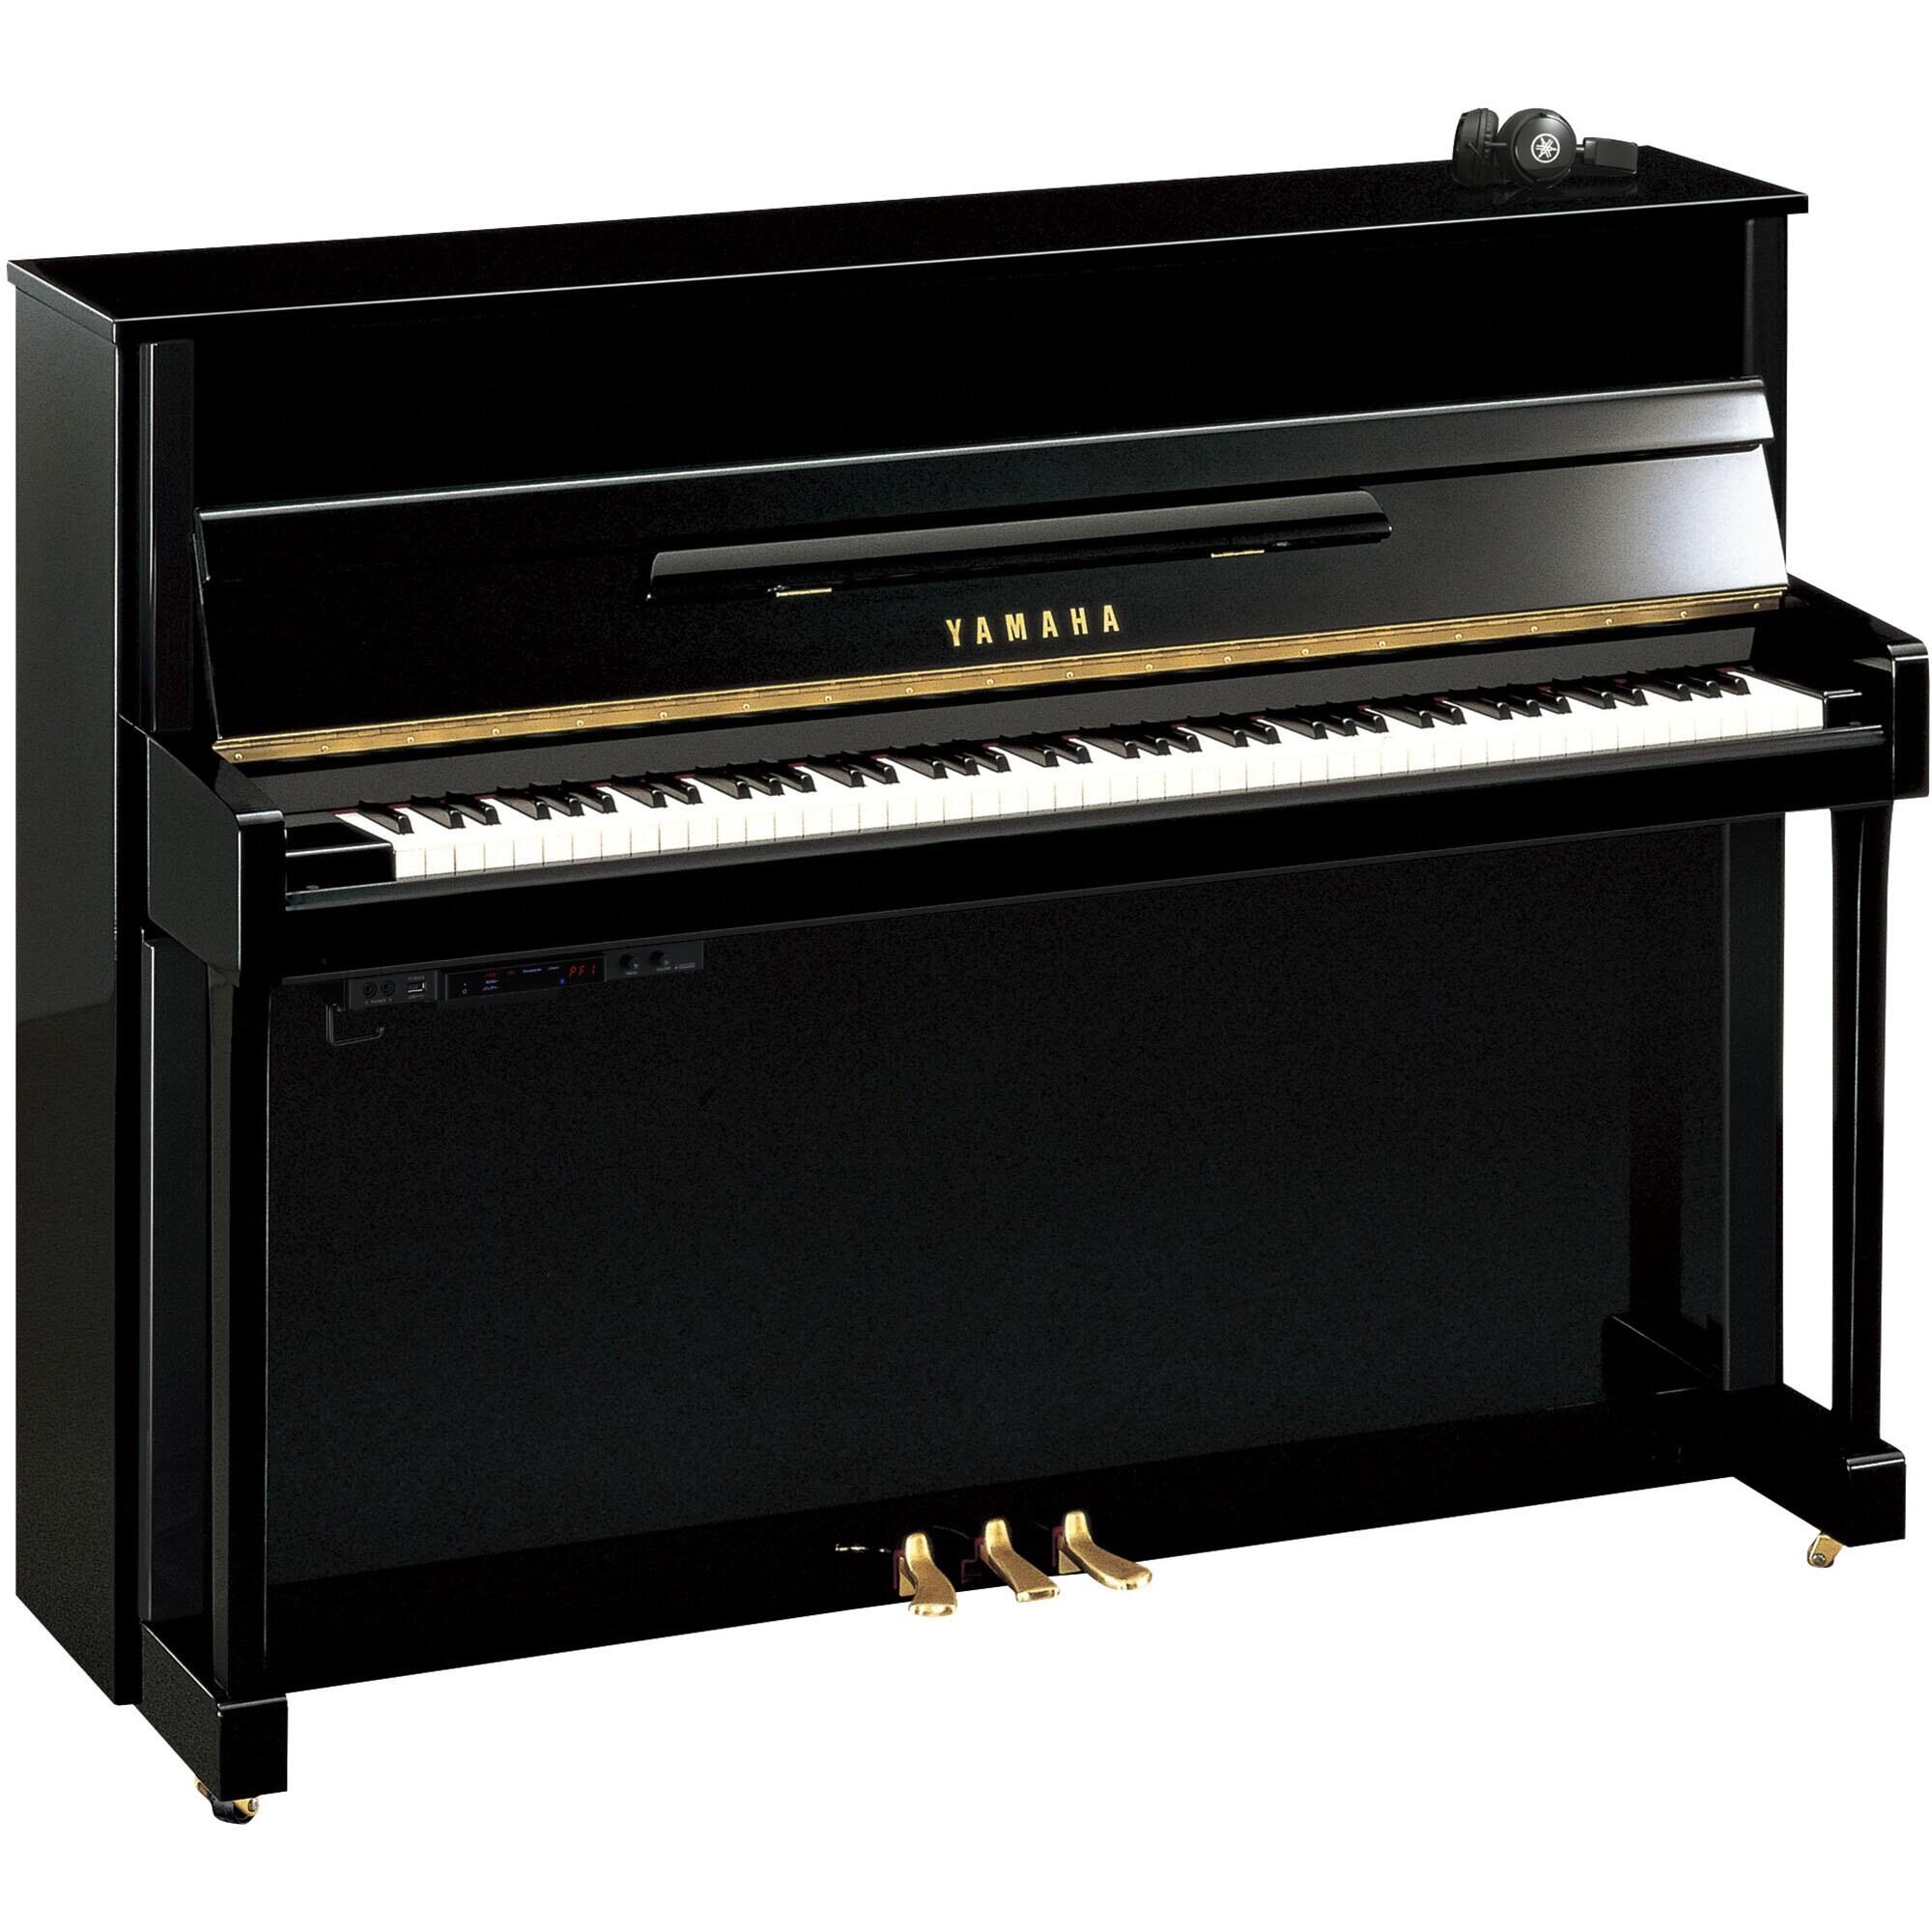 Yamaha Pianos Silent B2 SC3 PE Silent Noir poli-brillant 113 cm : photo 1